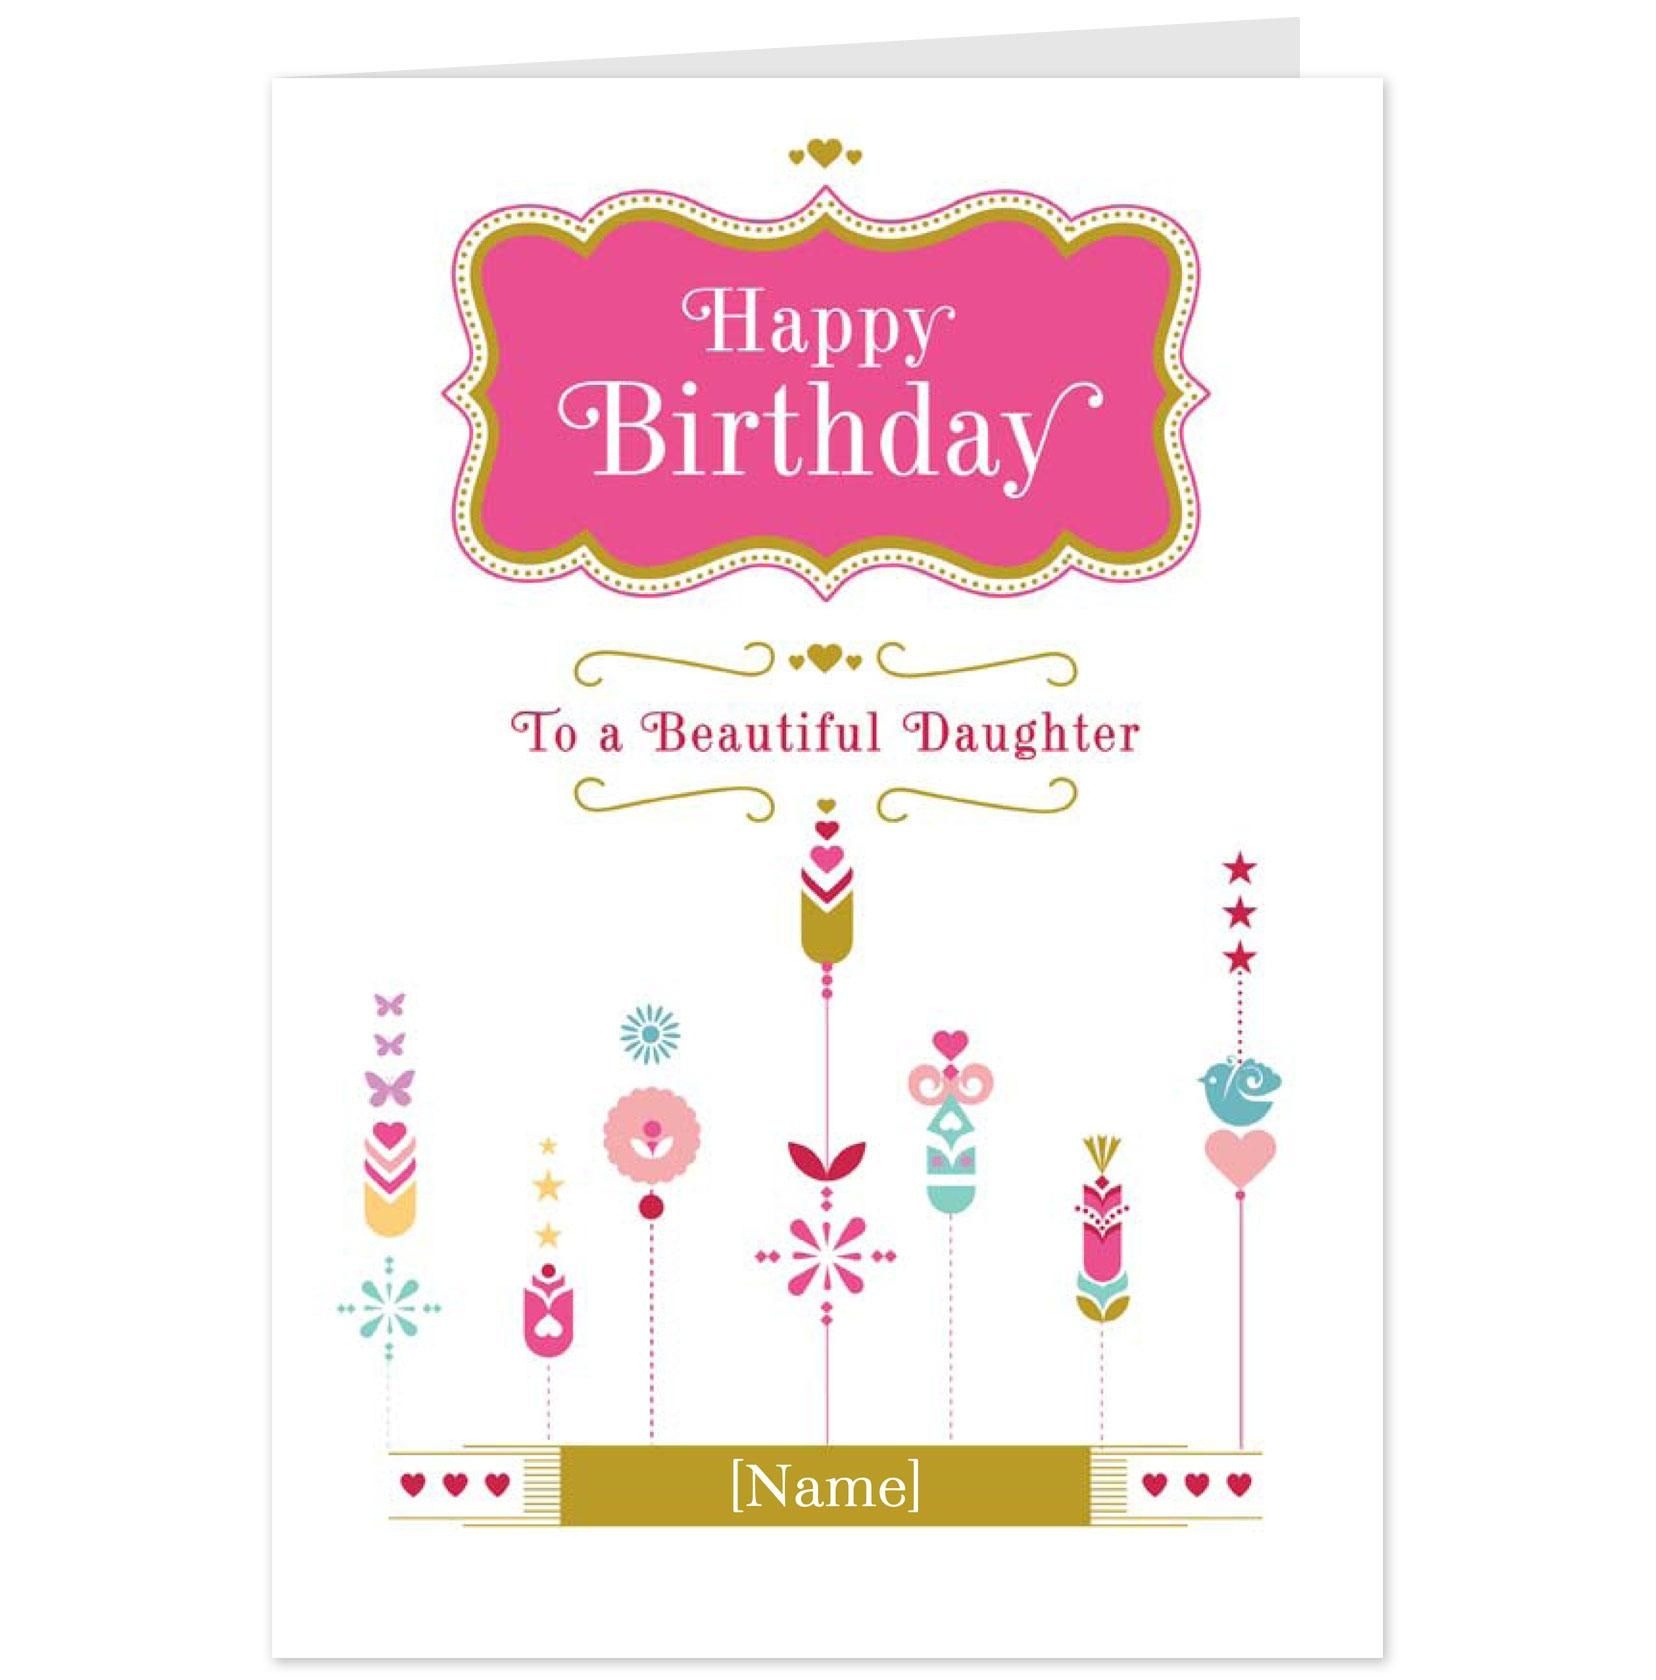 Free Printable Hallmark Birthday Cards | My Birthday - Free Printable Hallmark Cards